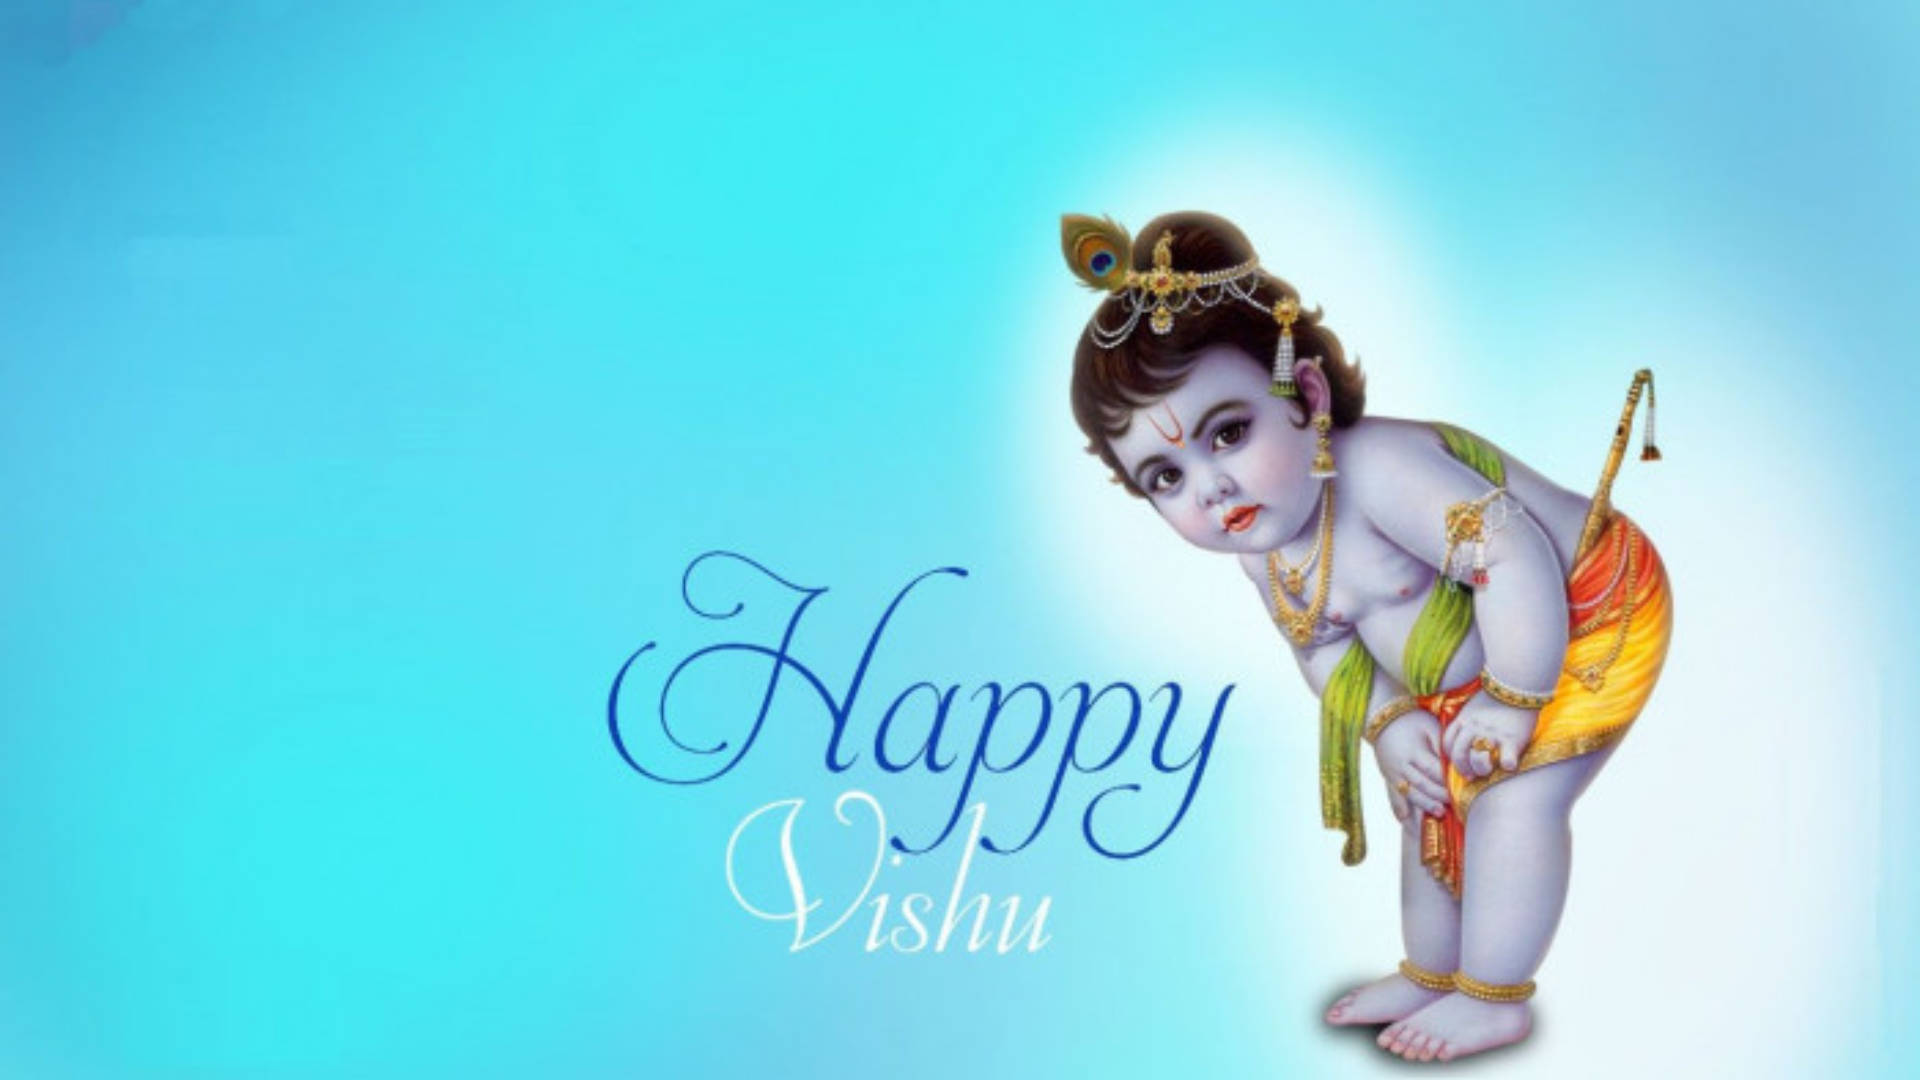 Happy Vishu Greeting Image In Blue Color Wallpaper